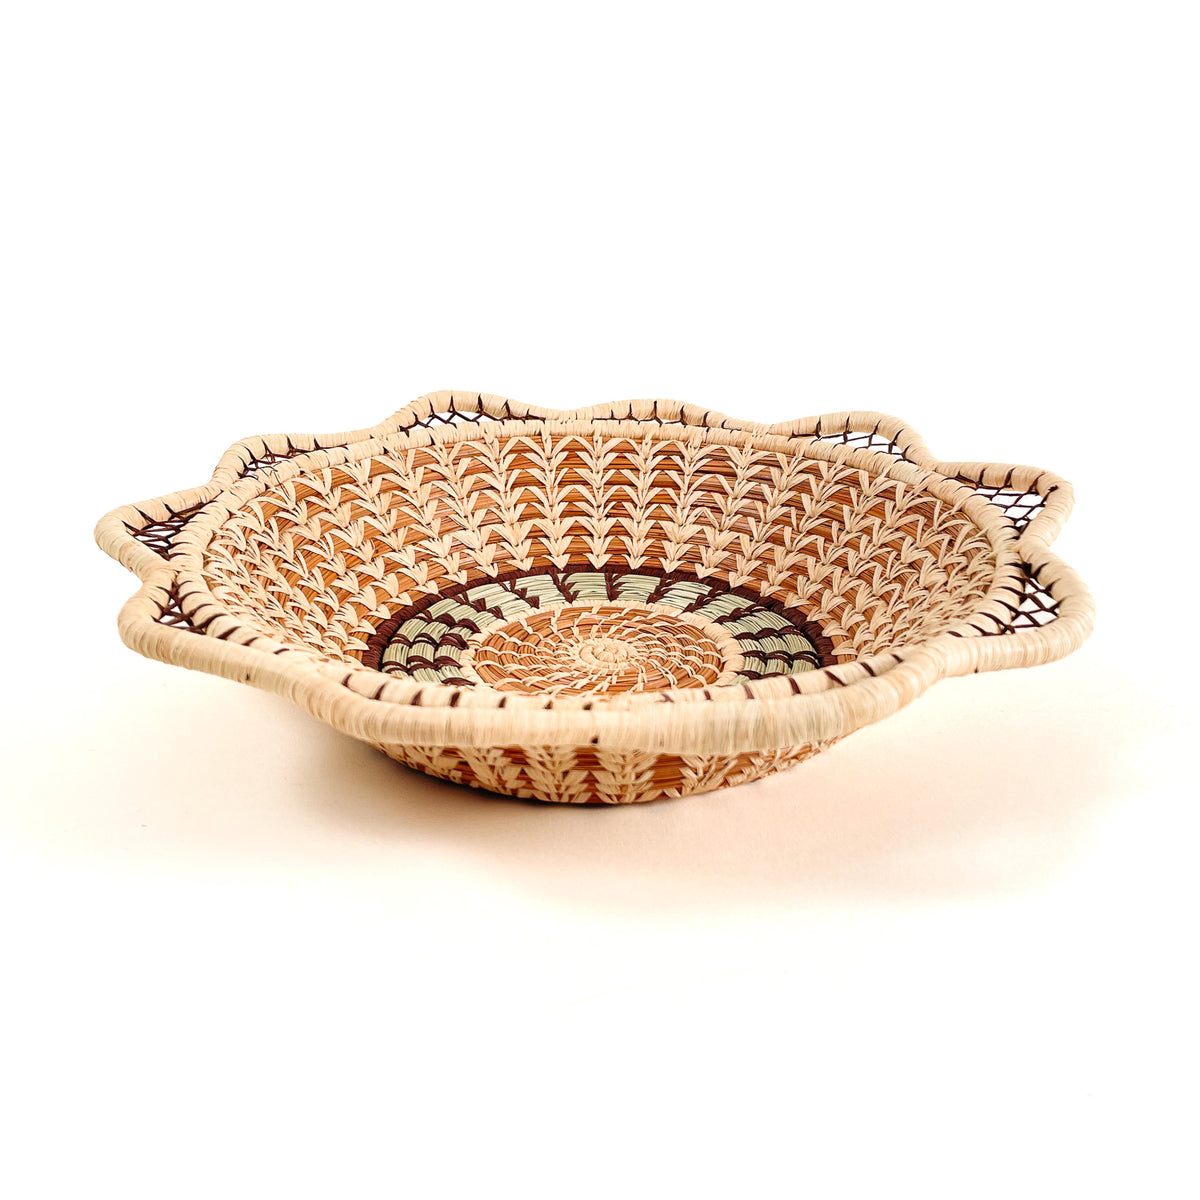 Pine needle handmade basket with traditional designs